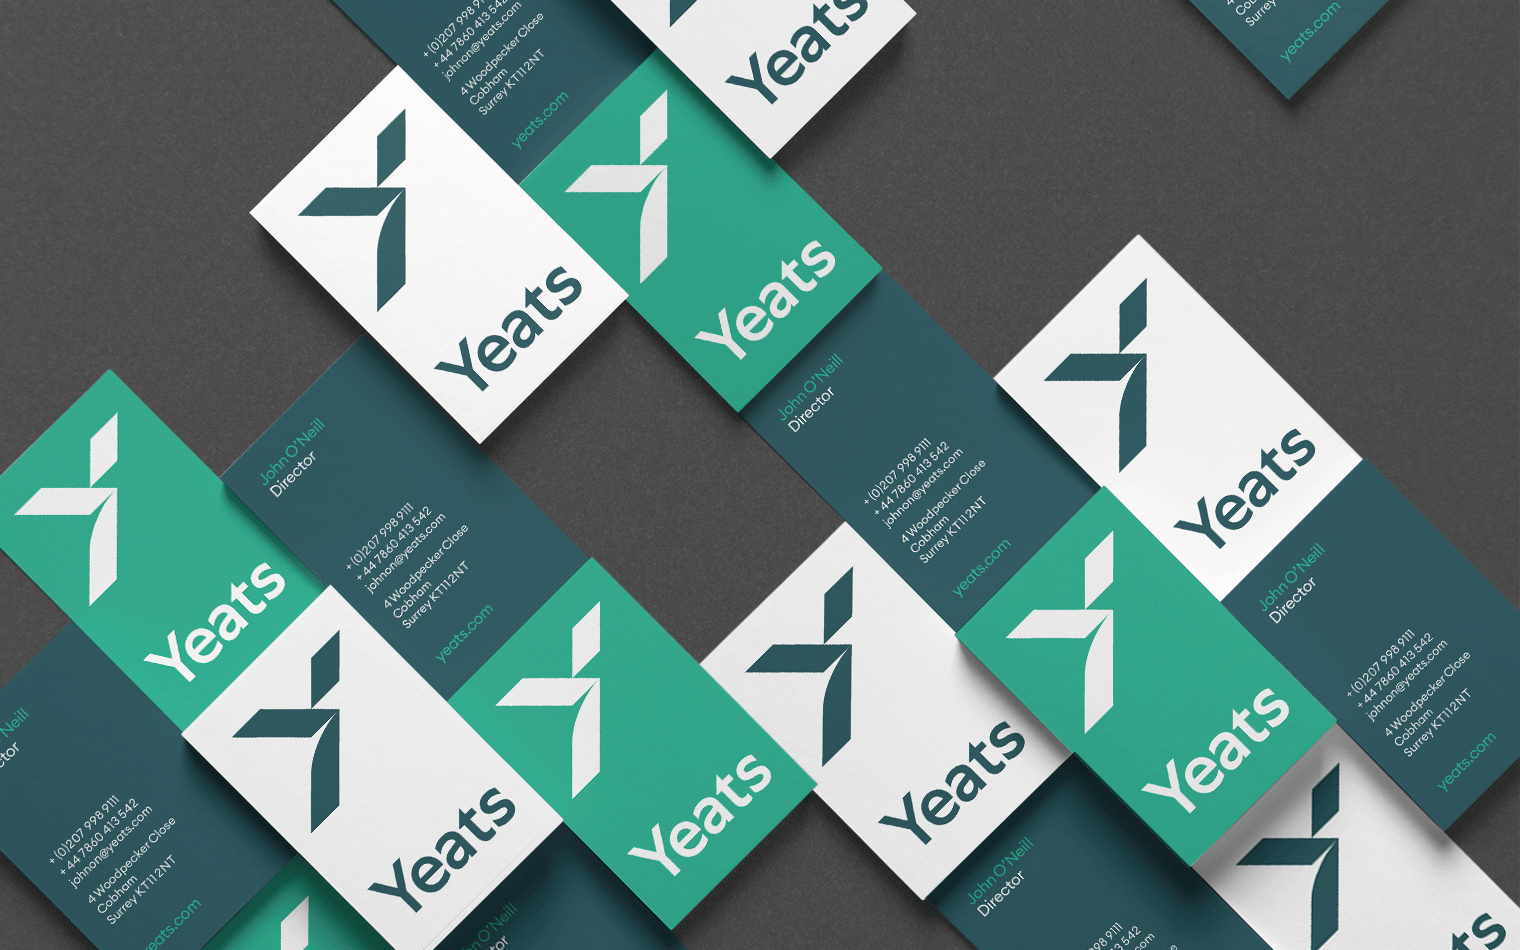 Yeats | Steve Edge Design